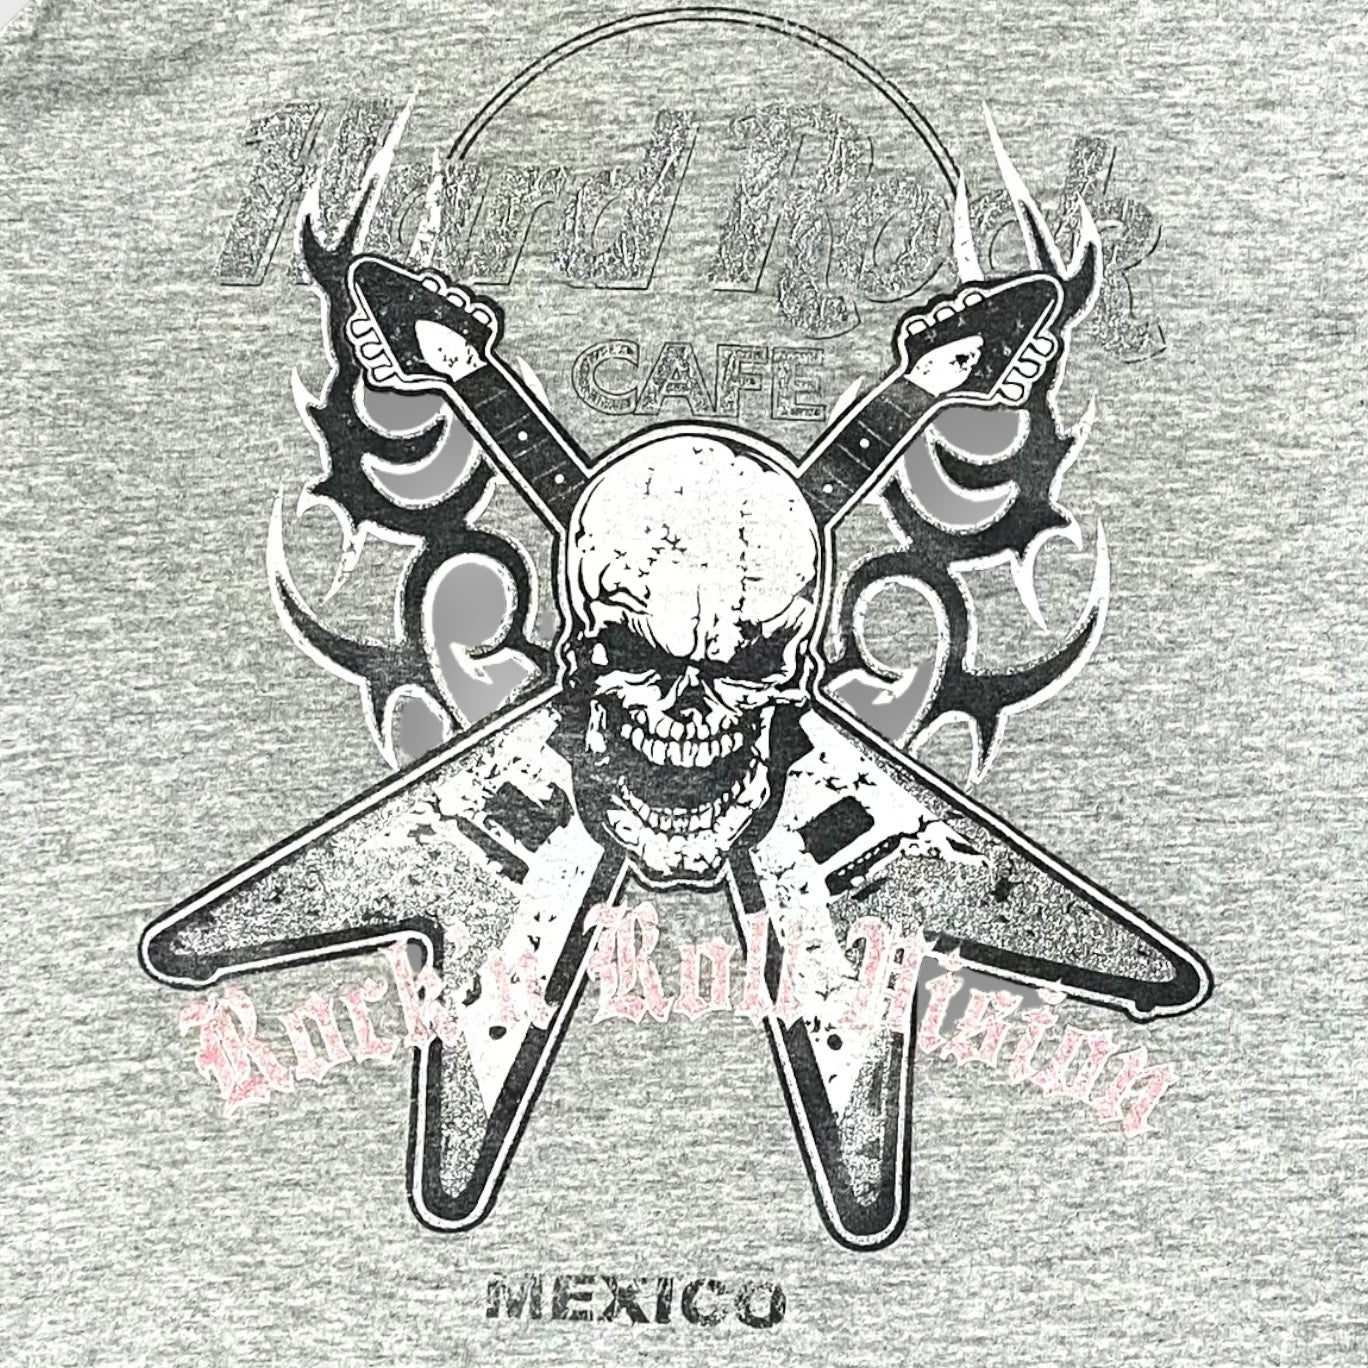 "Hard Rock Cafe" Skull design Raglan sleeve t-shirt